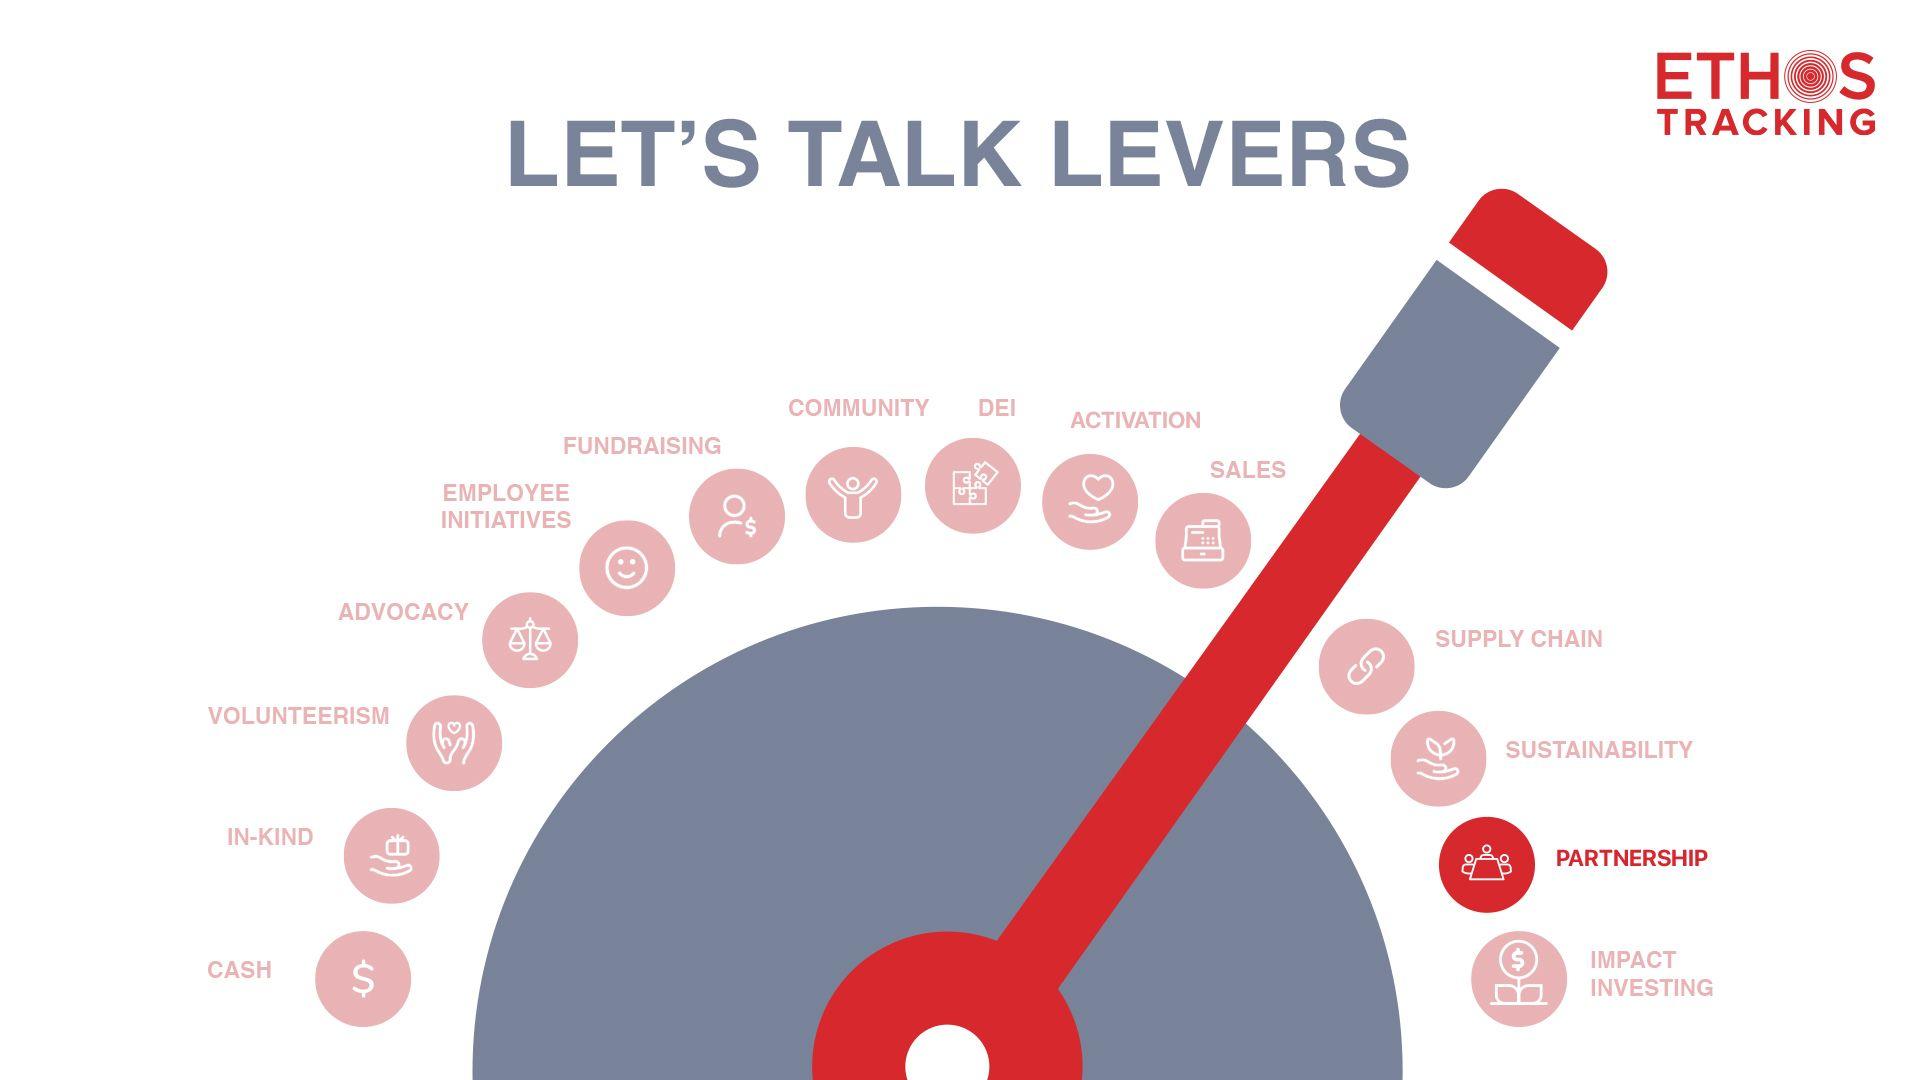 Let's Talk Levers: Partnership